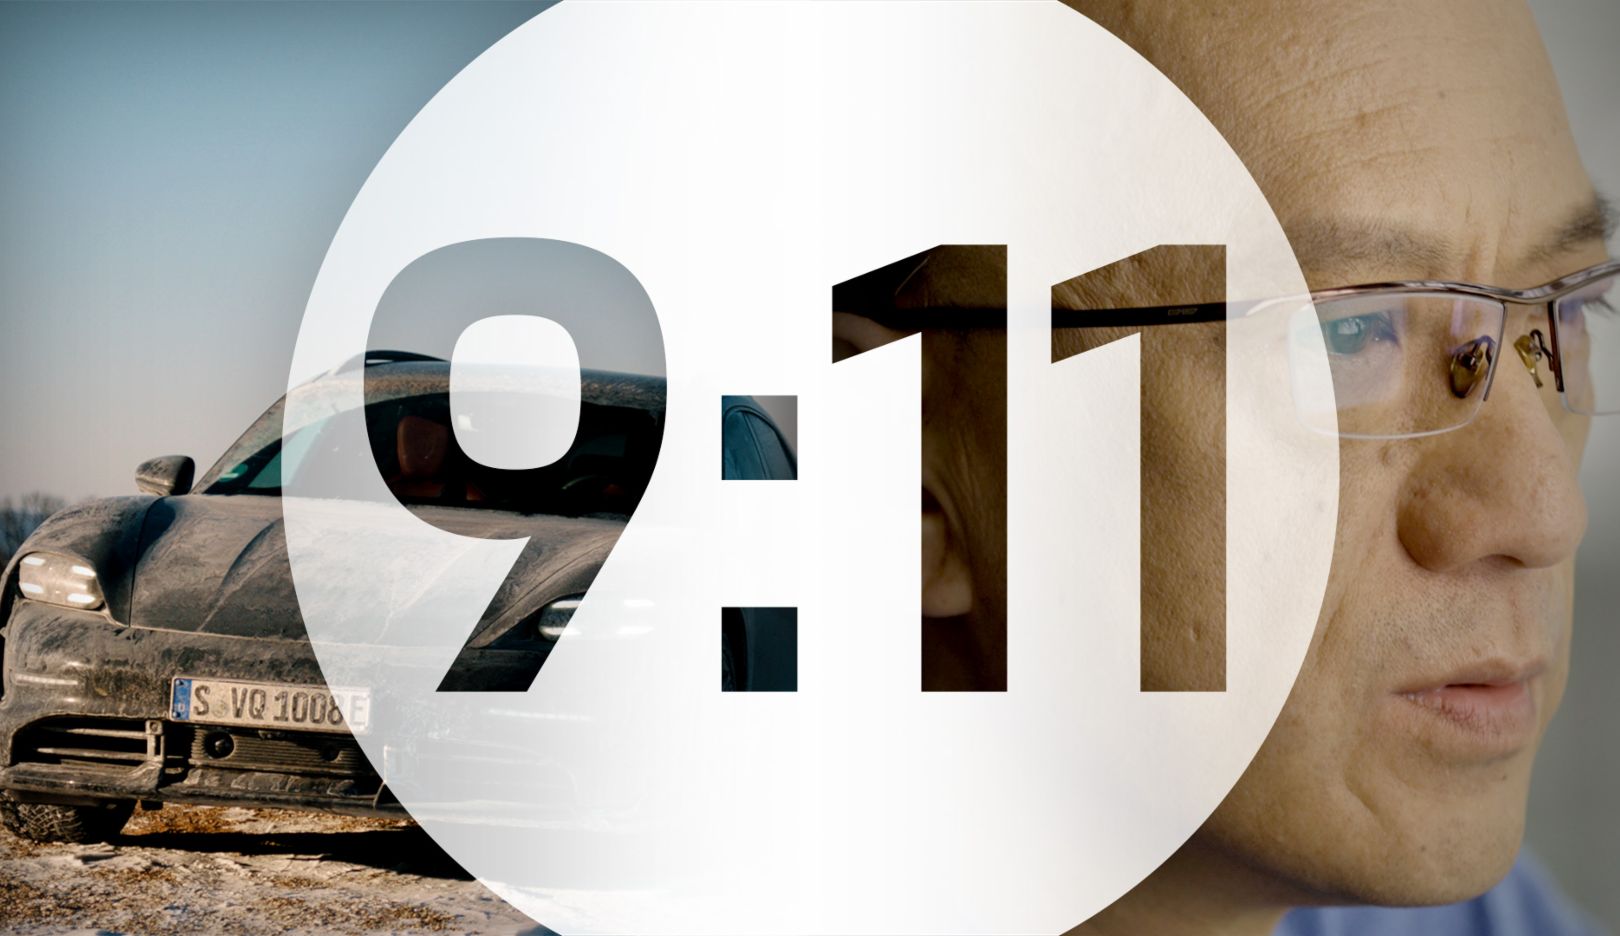 9:11 Magazine: New Paths